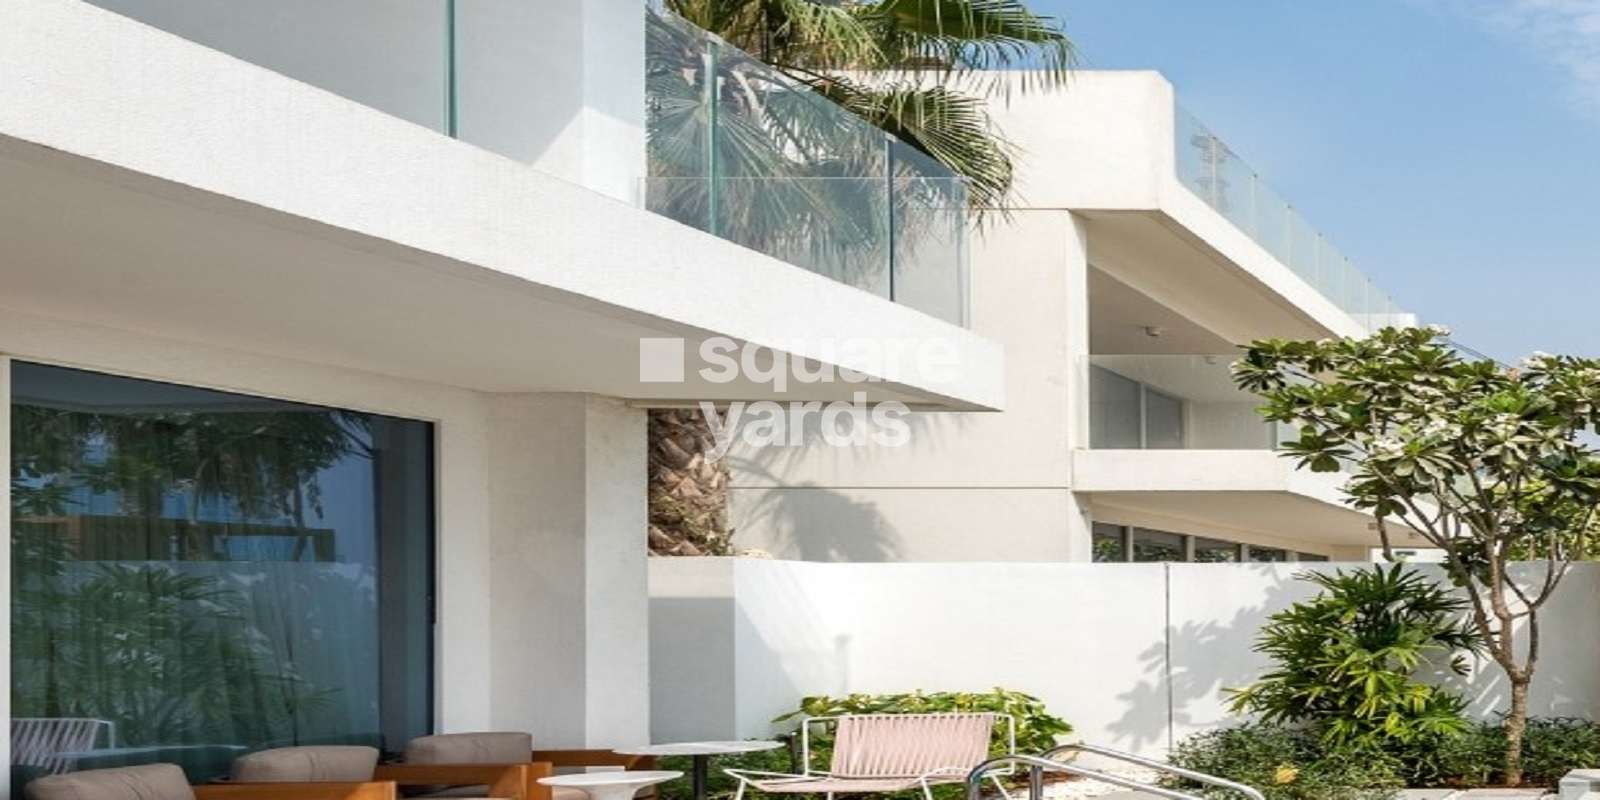 Viceroy Beach Villas Cover Image